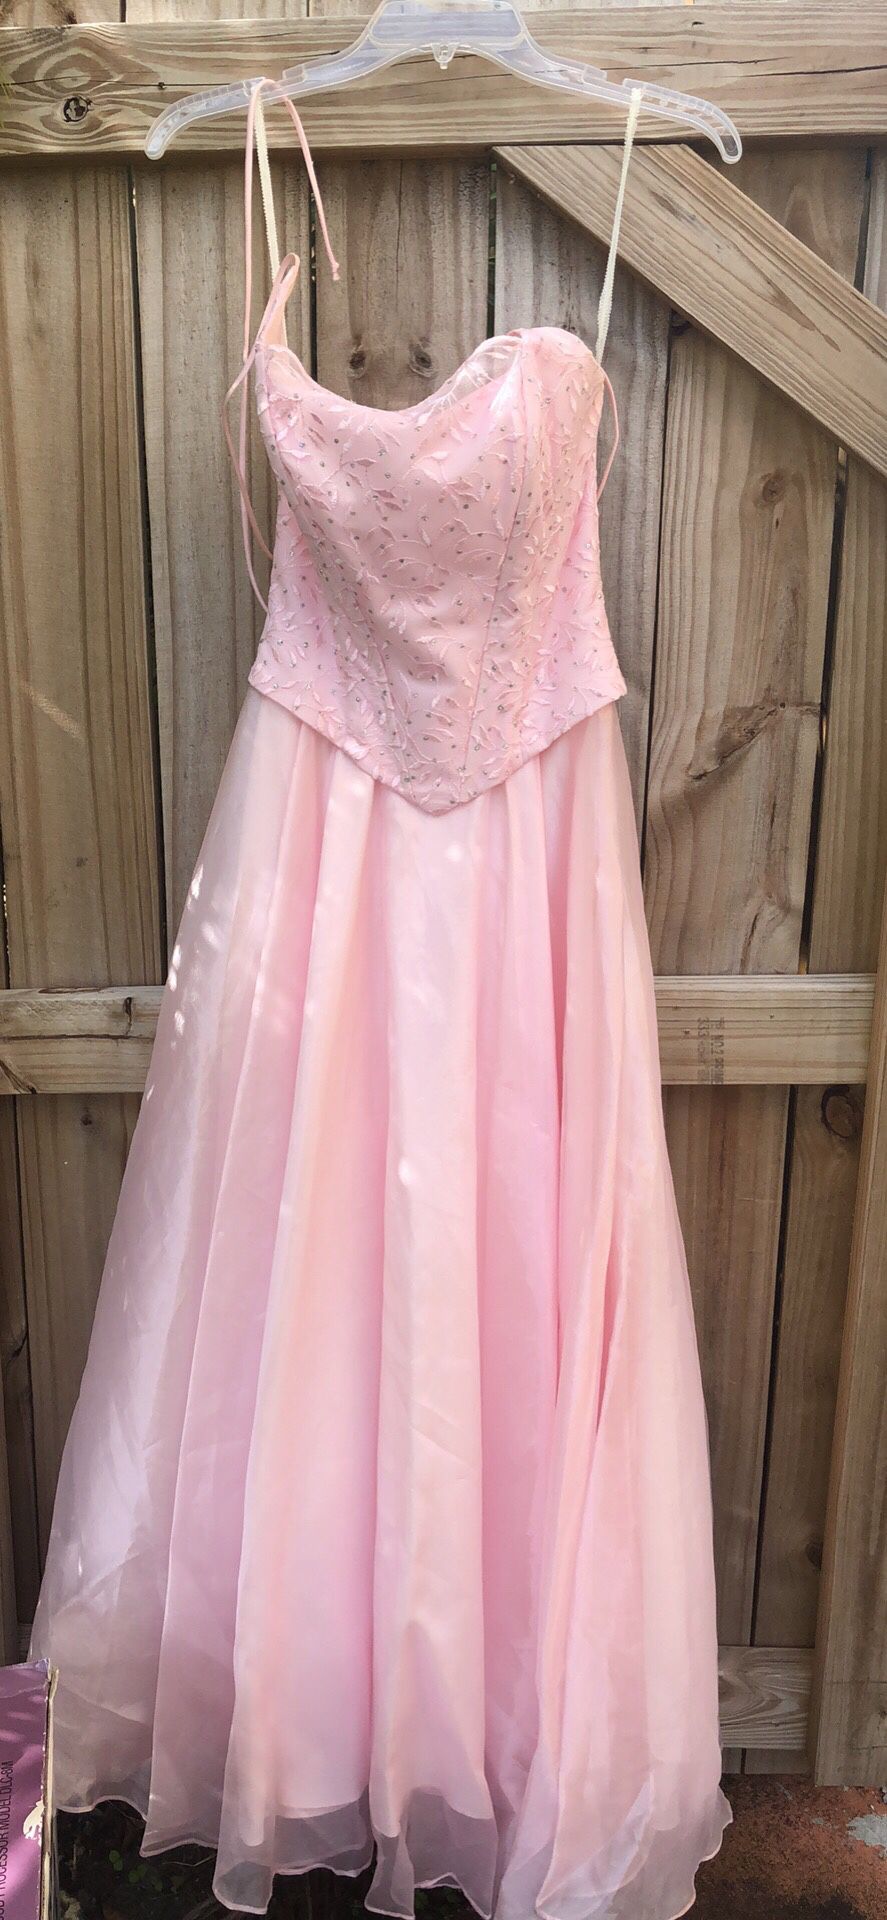 Pretty pink elegant dress